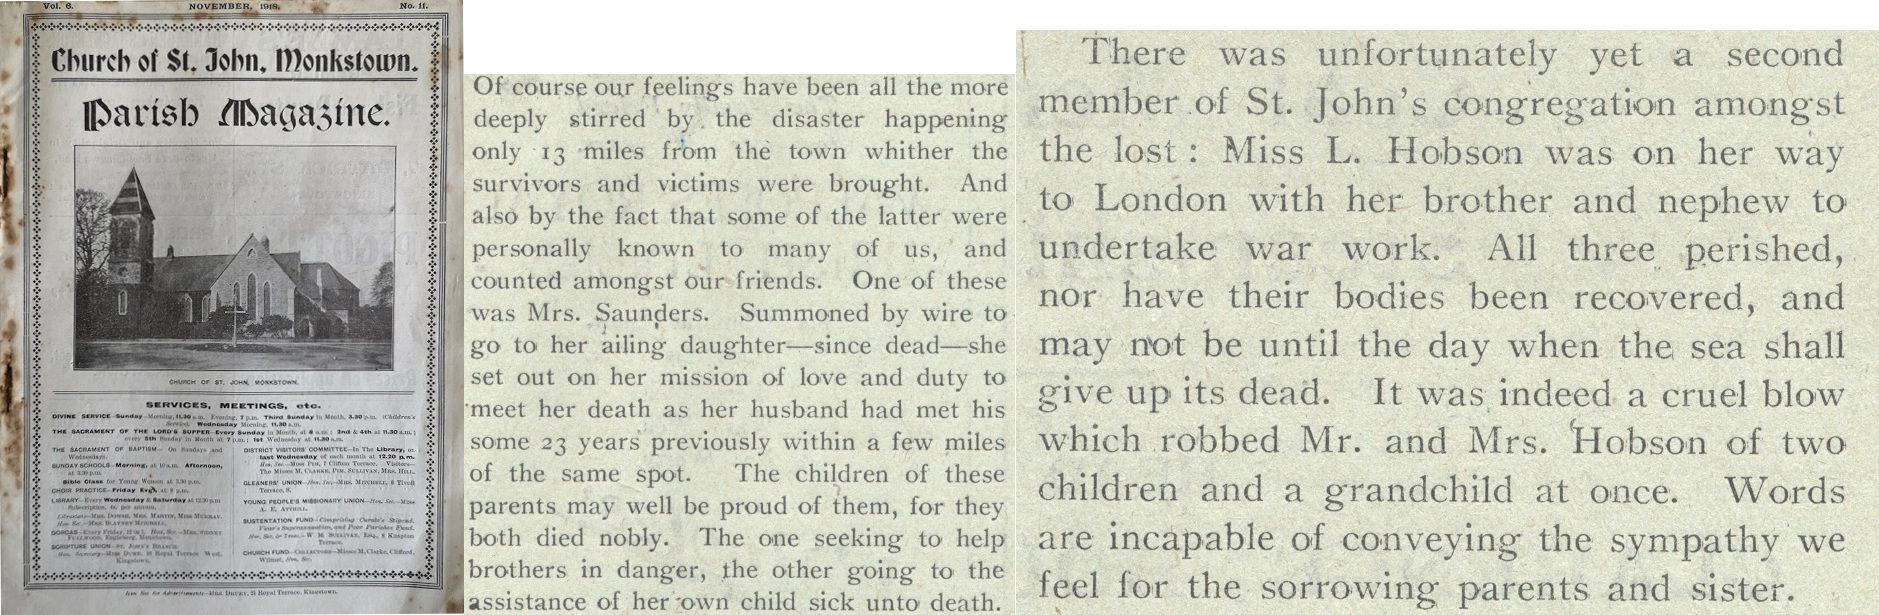 Church of St John Monkstown, Parish Magazine, Nov. 1918. RCB Library, P839/25/1